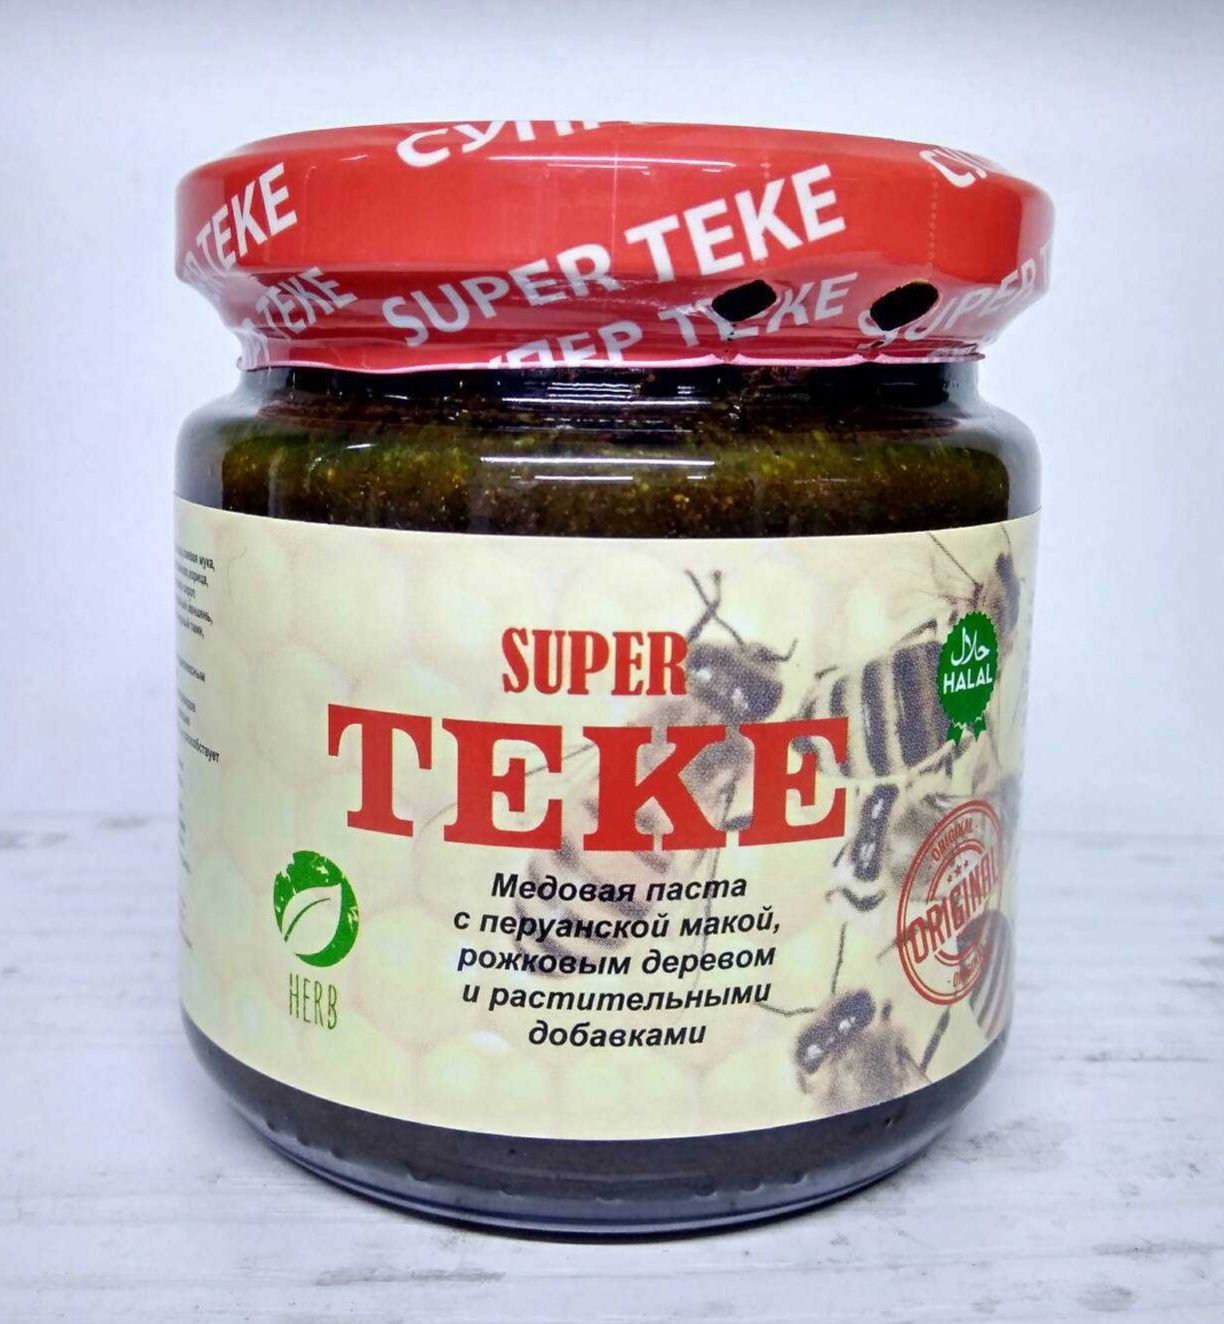 Эпимедиумная паста SUPER TEKE (Cynep Teke)